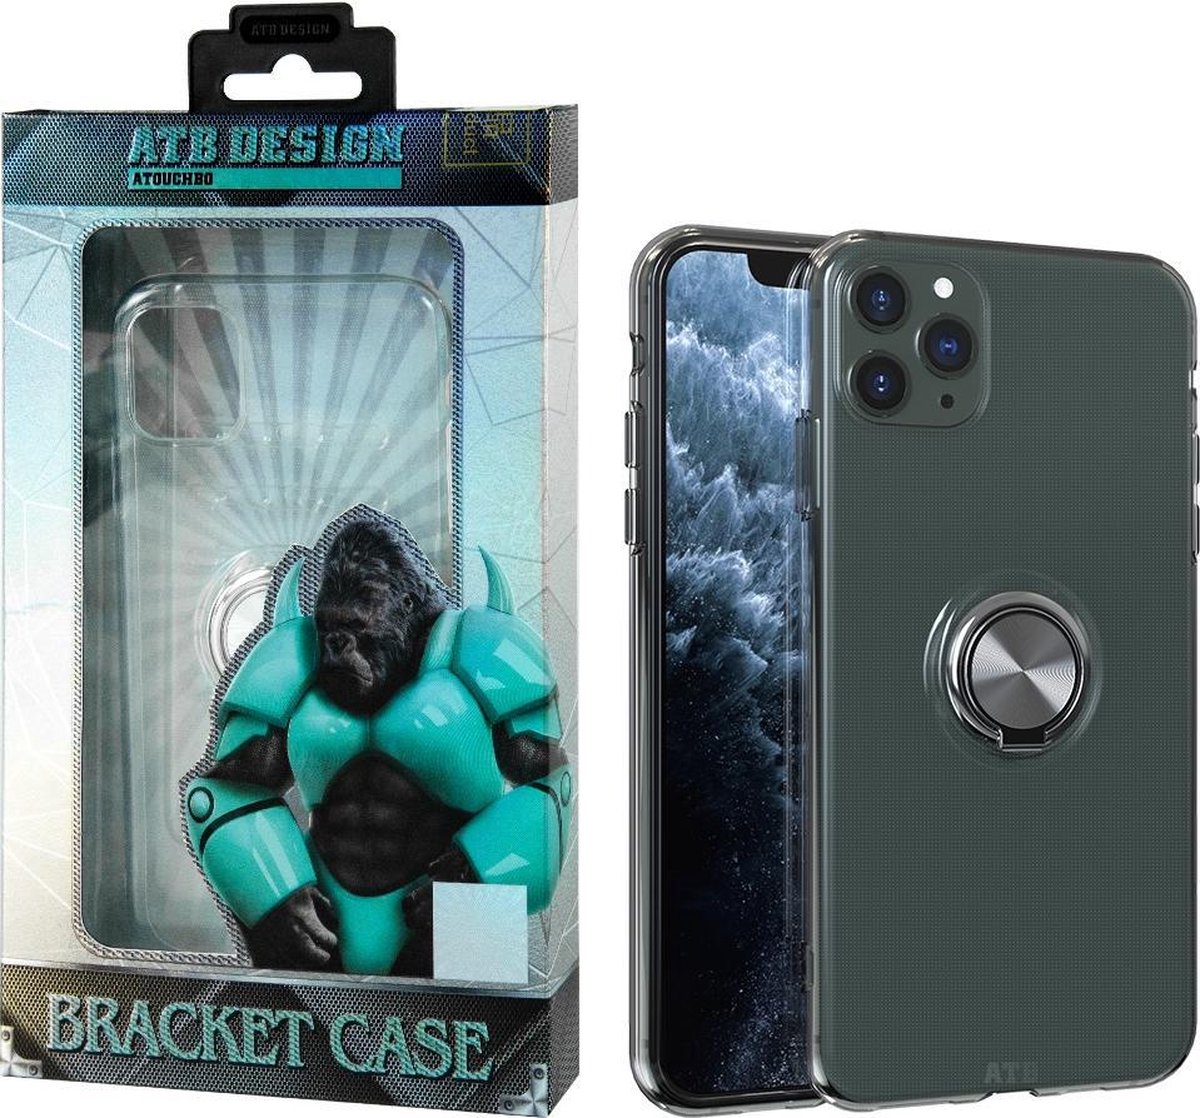 Atouchbo Bracket Case iPhone 11 Pro Max hoesje transparant